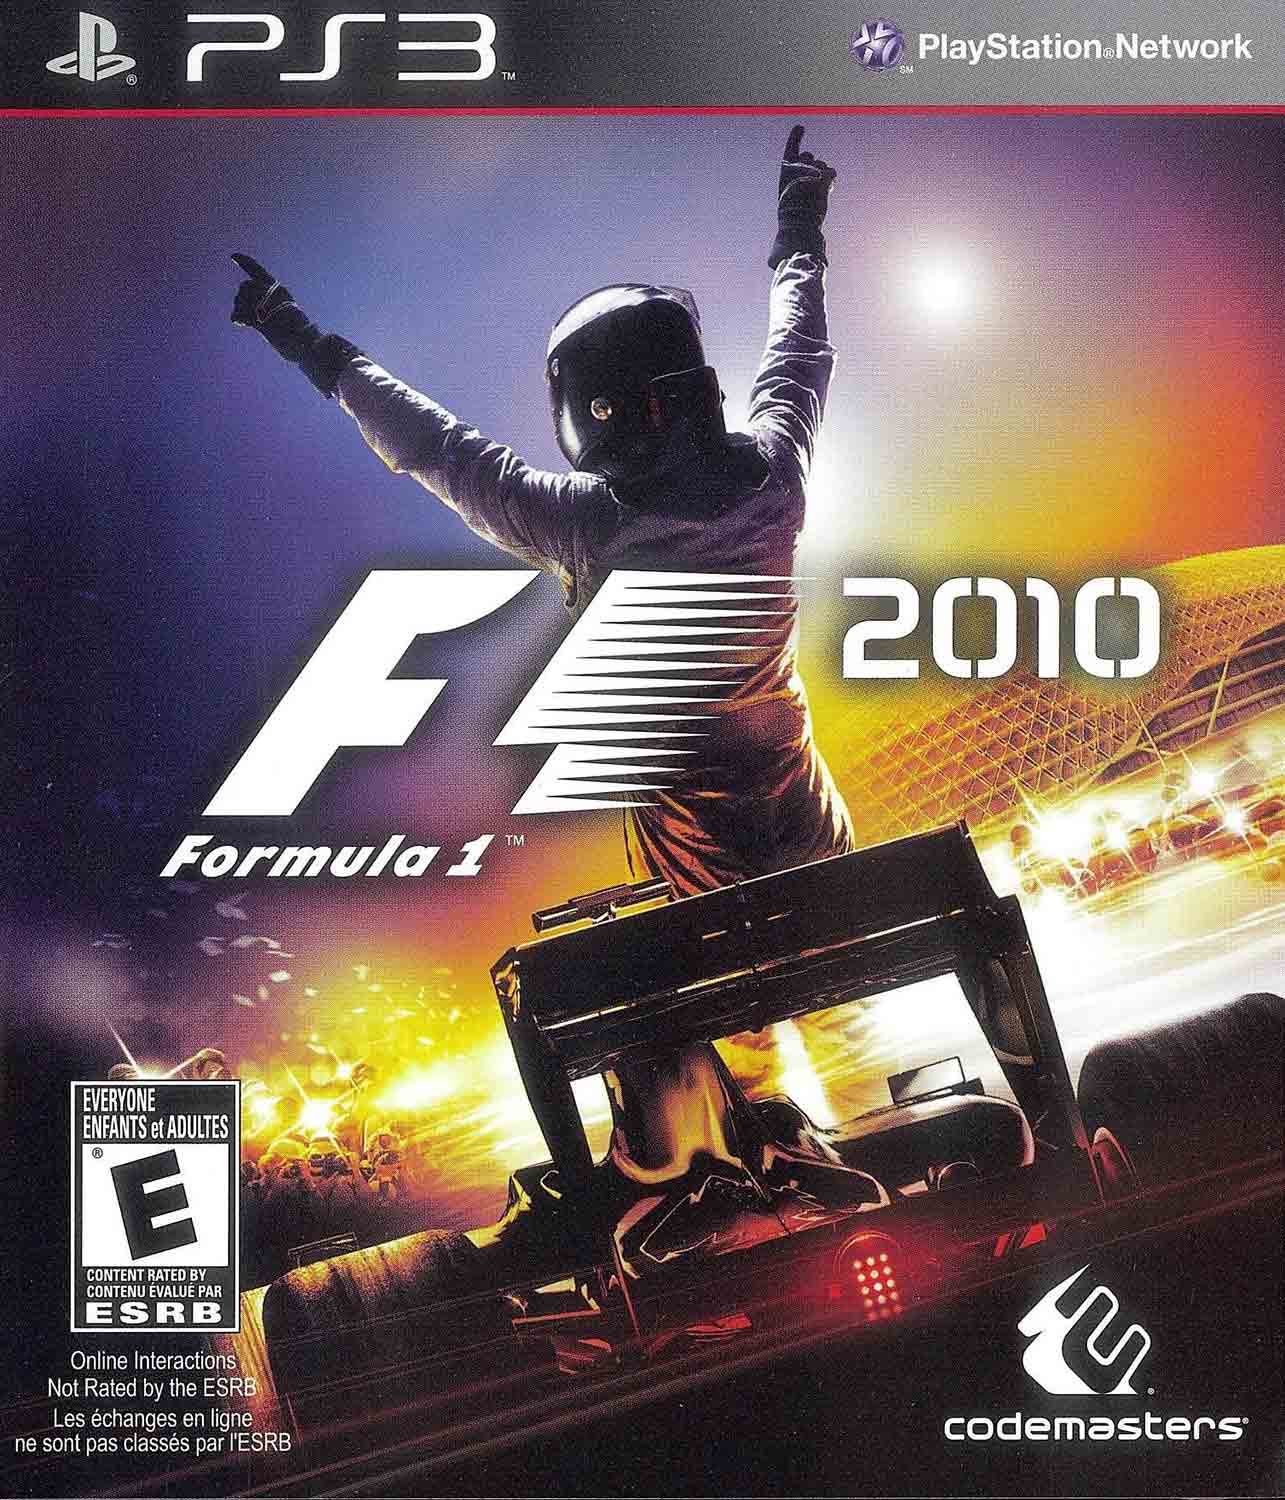 Hra F1 2010: Formula 1 pro PS3 Playstation 3 konzole